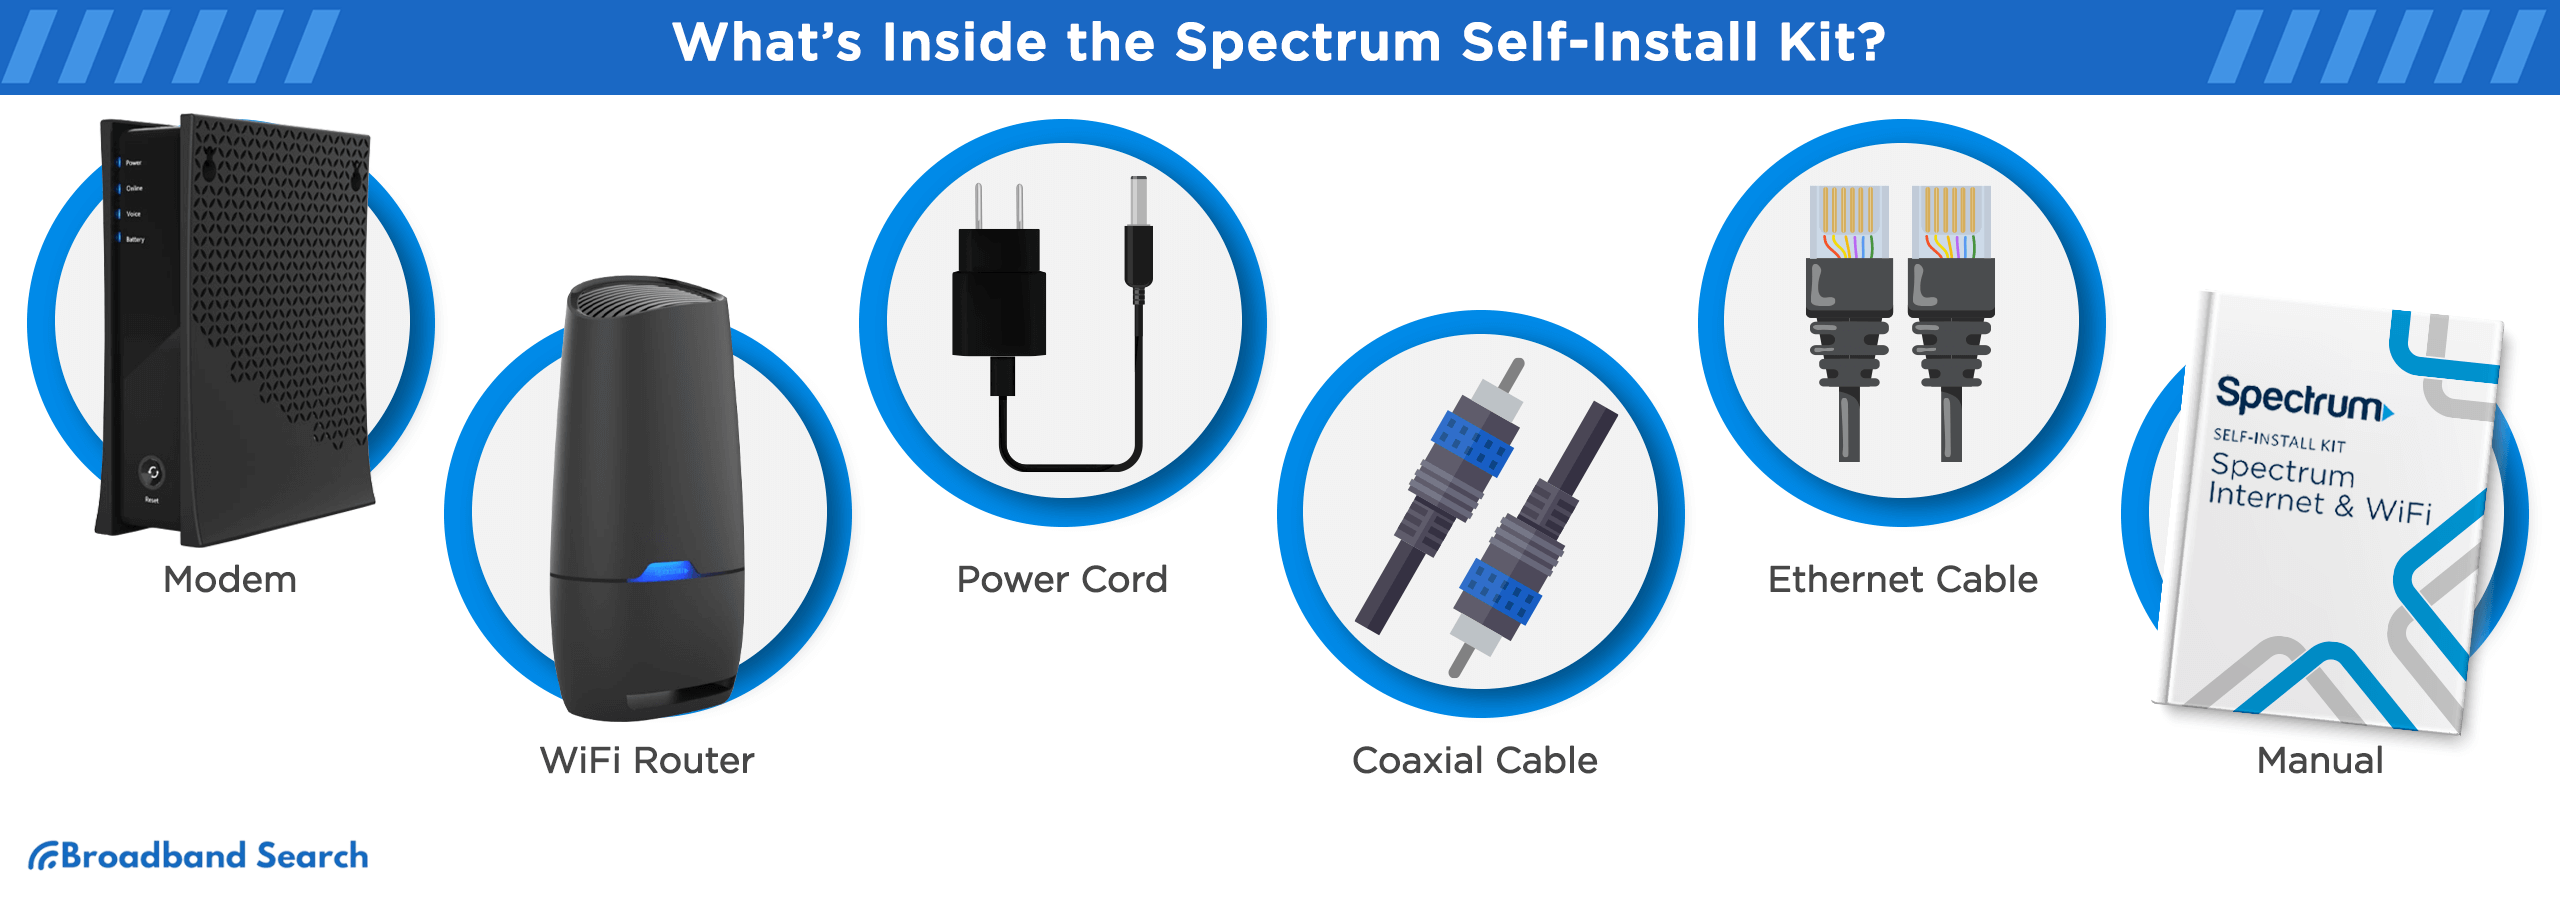 What's inside the spectrum self-install kit